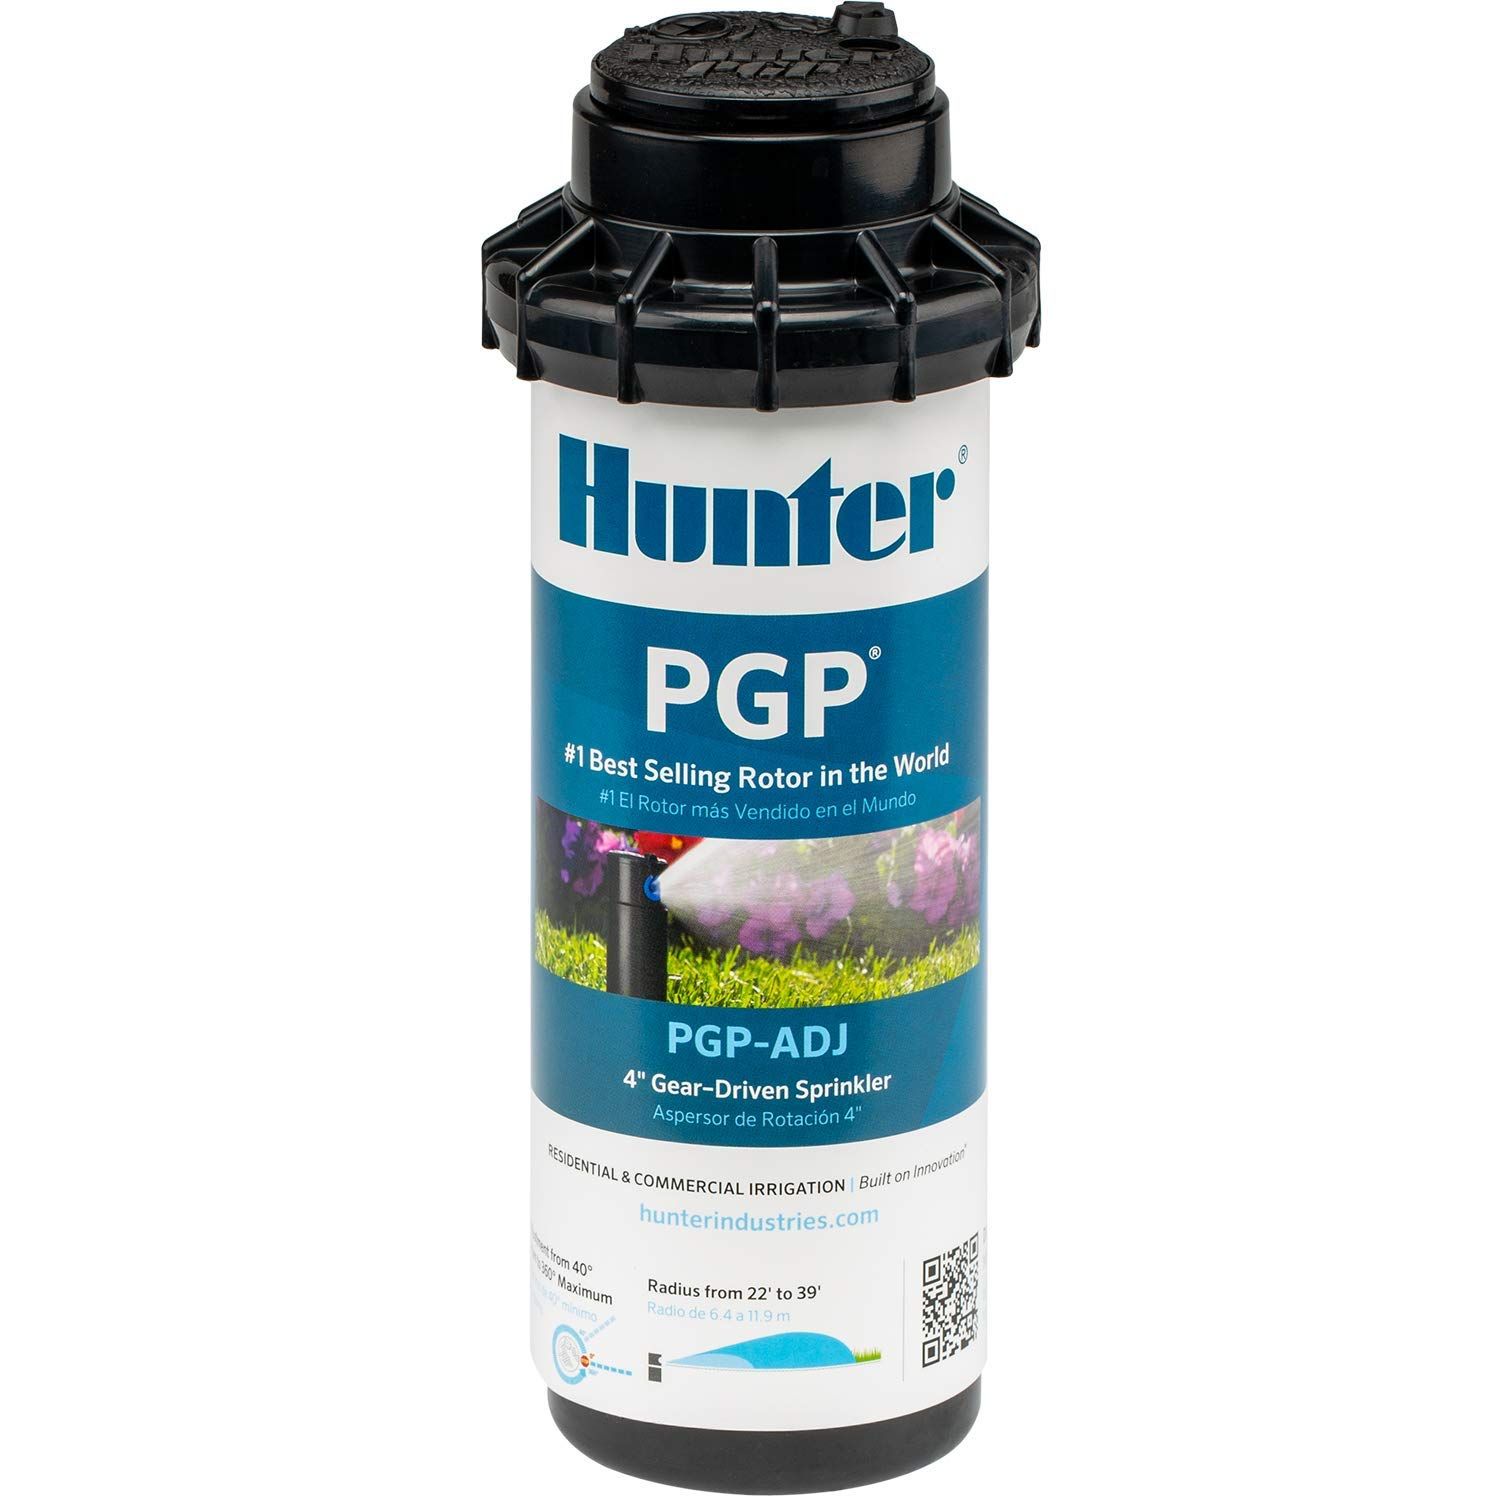 a bottle of hunter pgp gear driven sprinkler